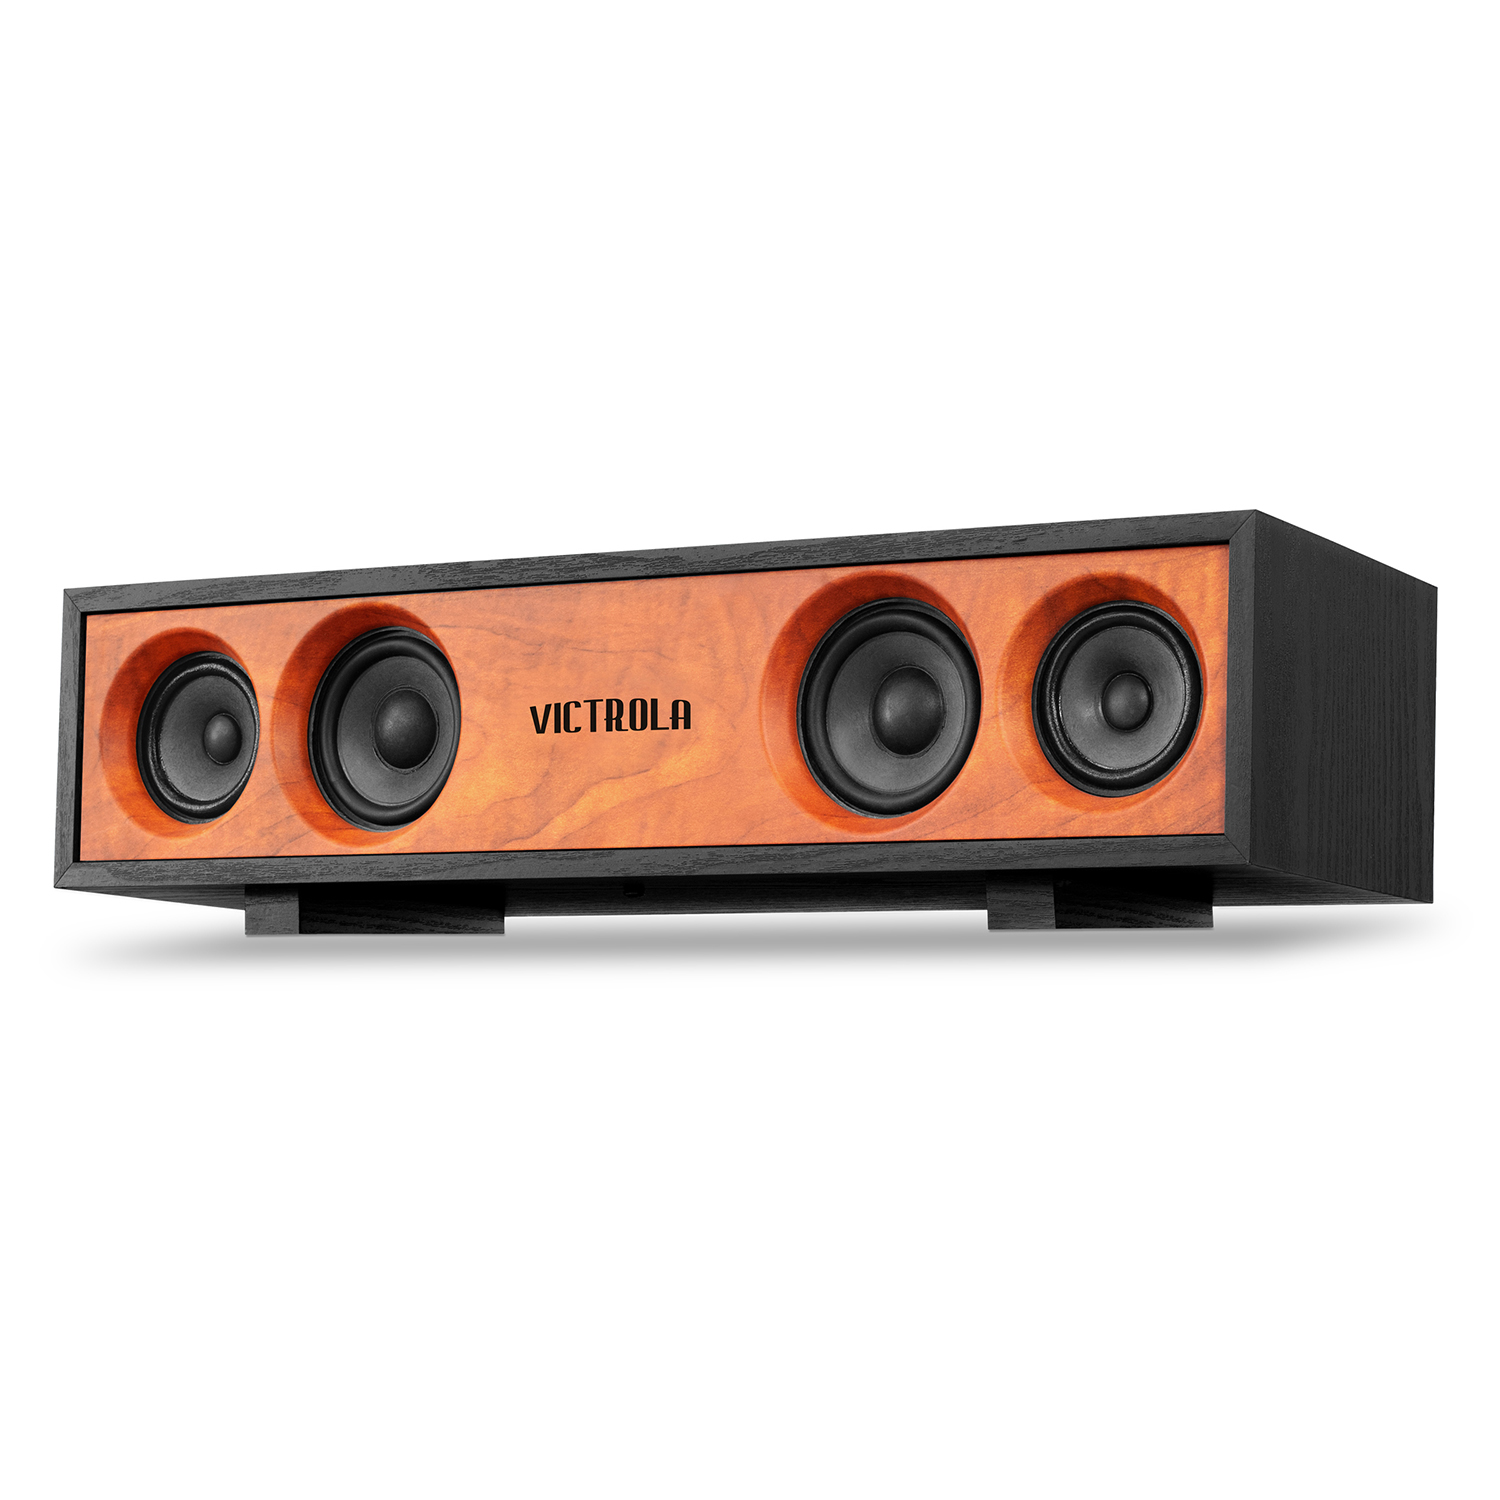 Victrola Bluetooth Hi-Fi Speaker with Powerful 30 Watt Sound - image 2 of 2